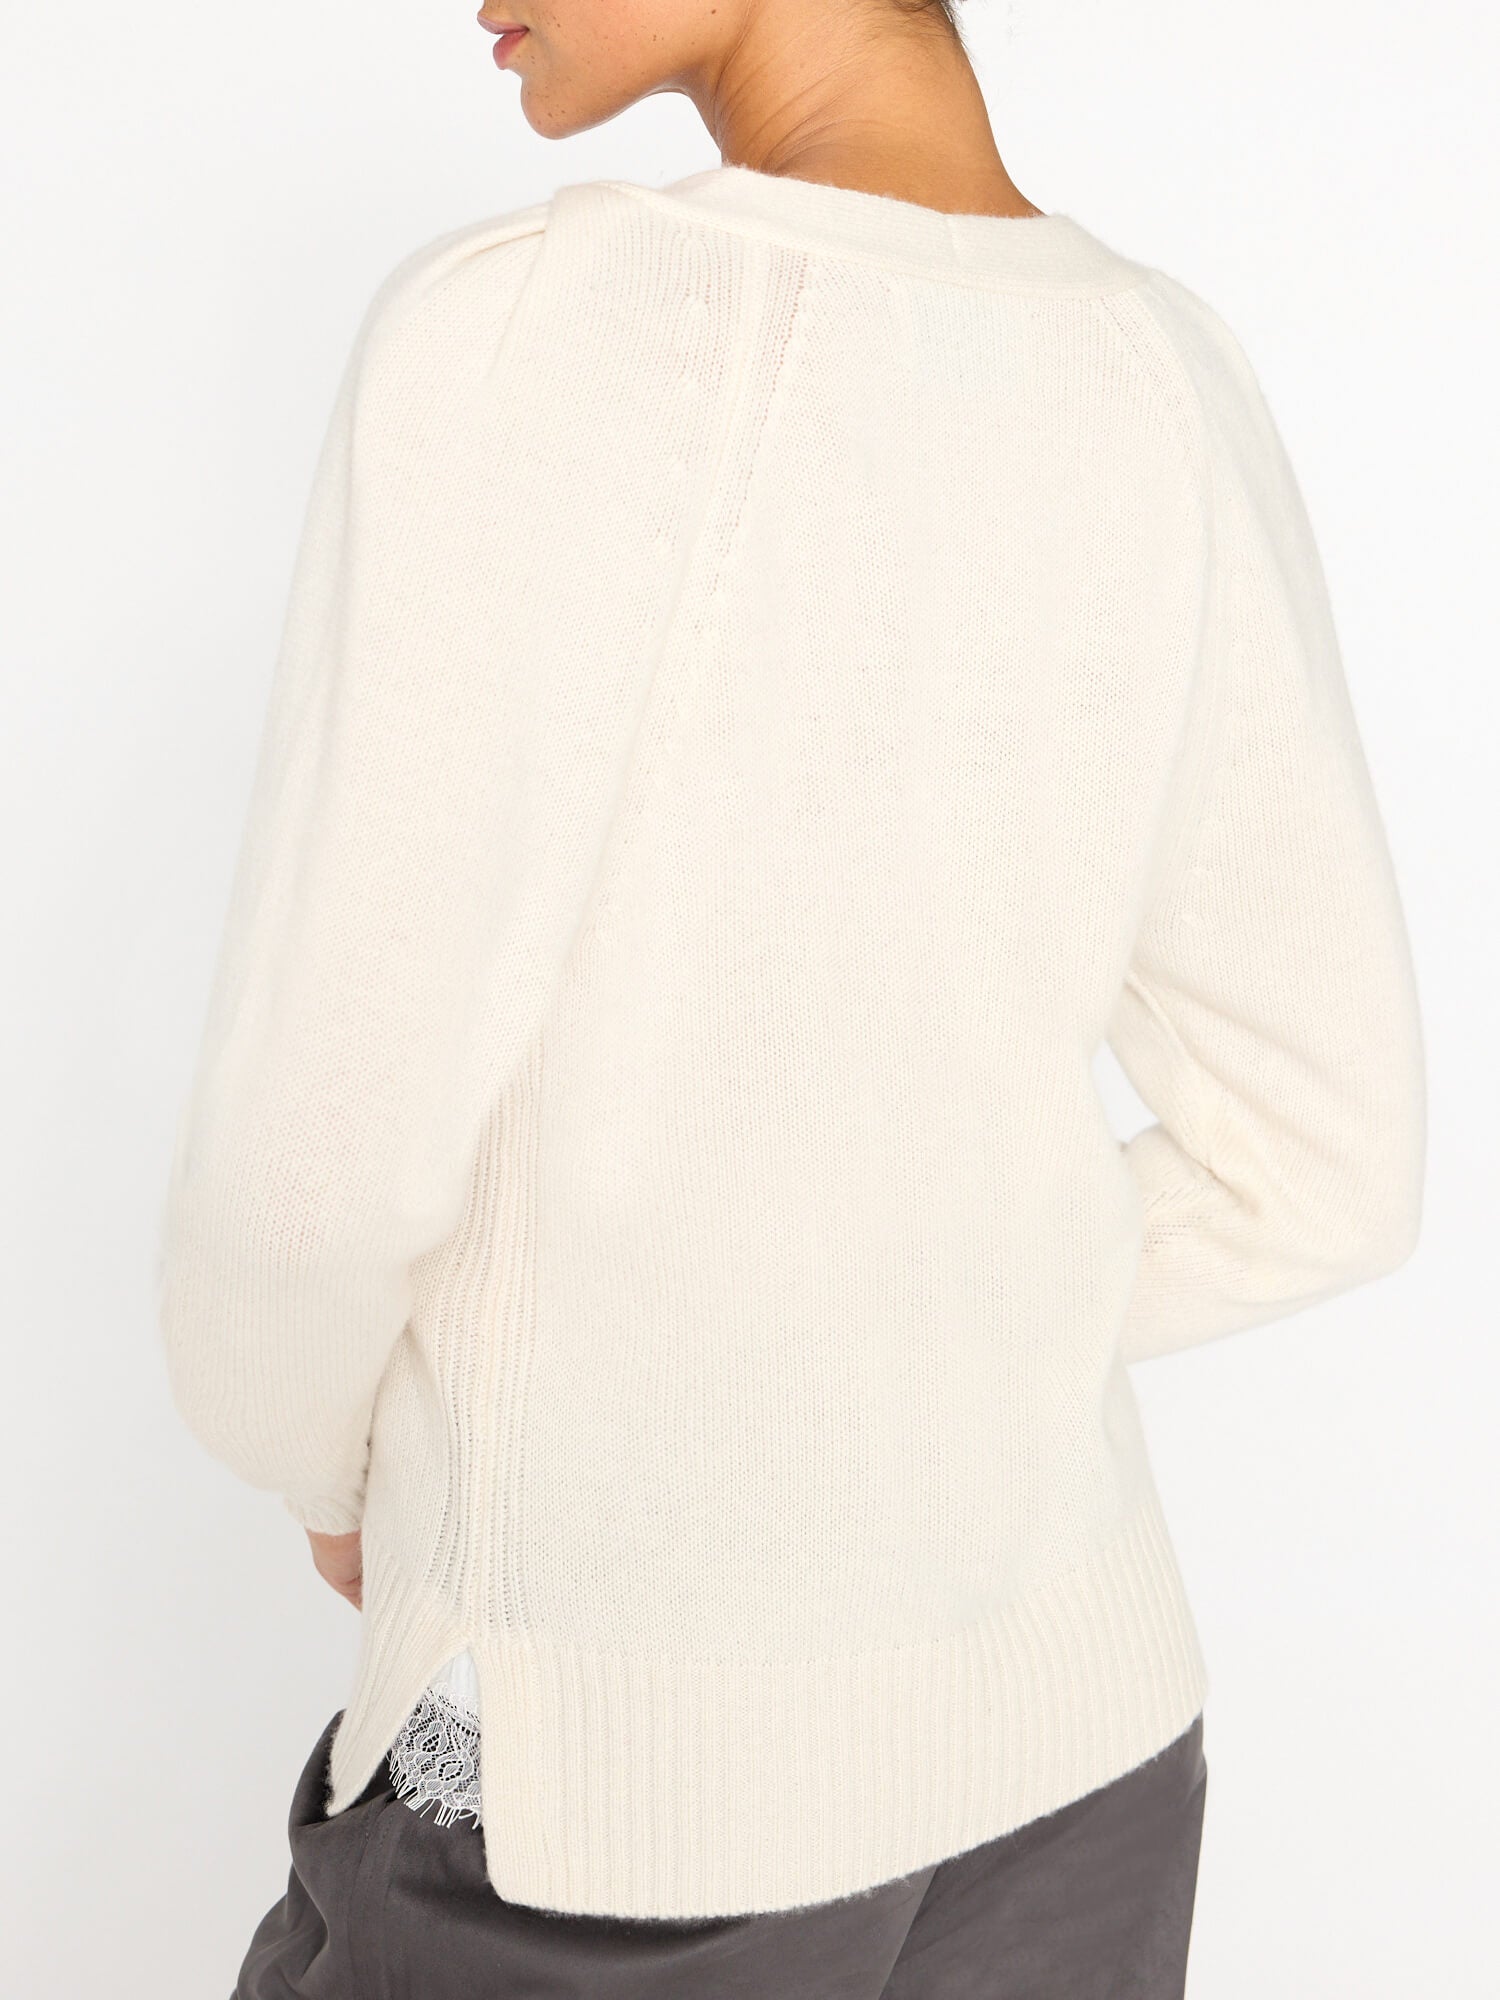 Ida white layered lace v-neck sweater back view